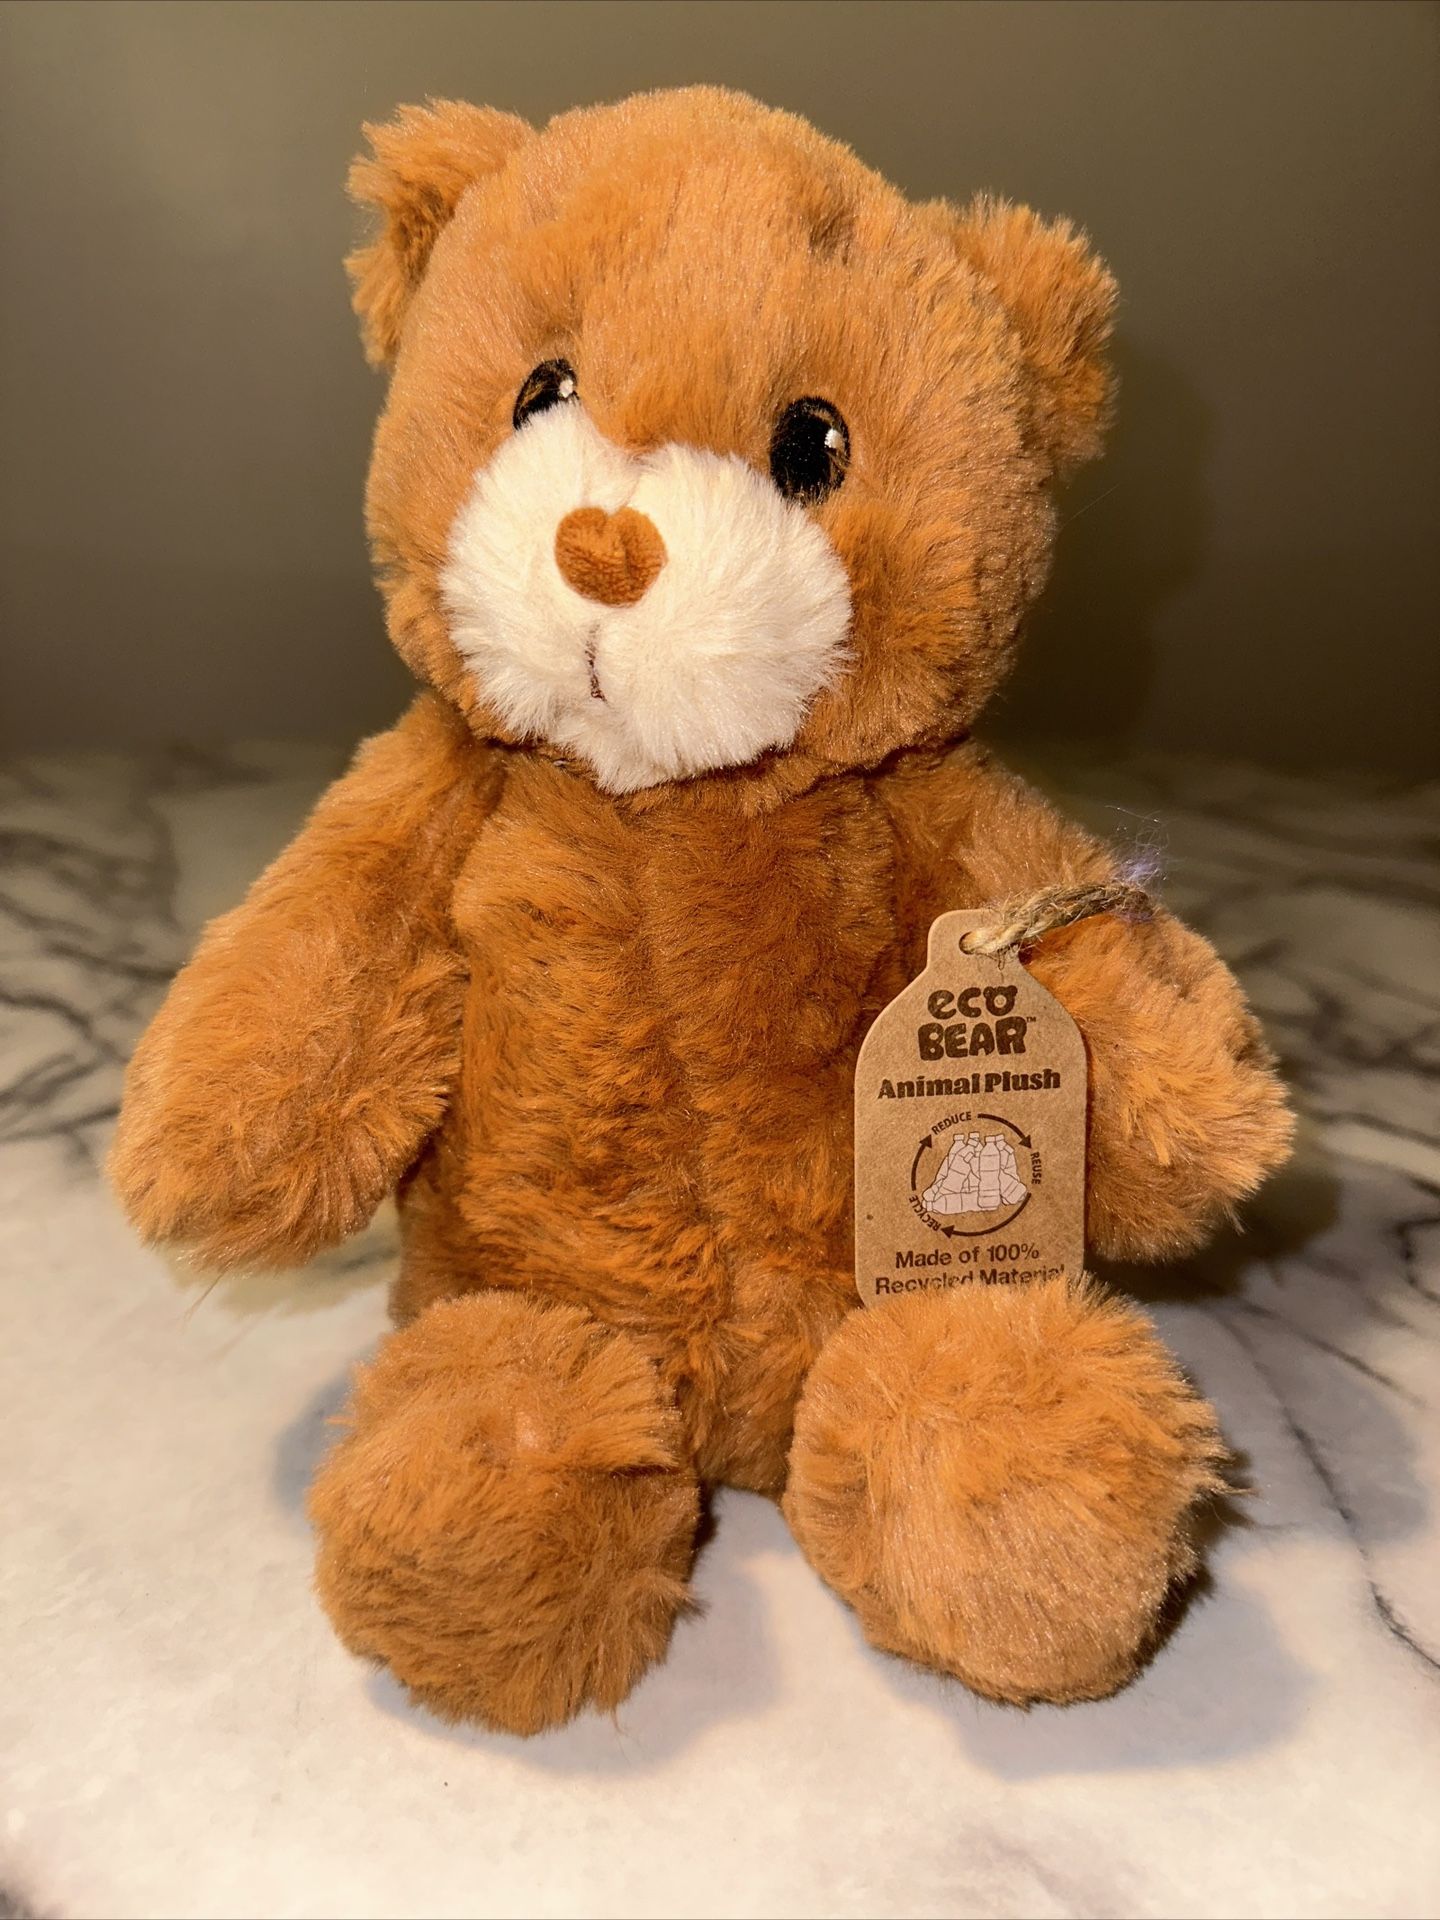 NWT Goffa Eco Bear Plush Teddy 100% Recycled Material 12" stuffed animal